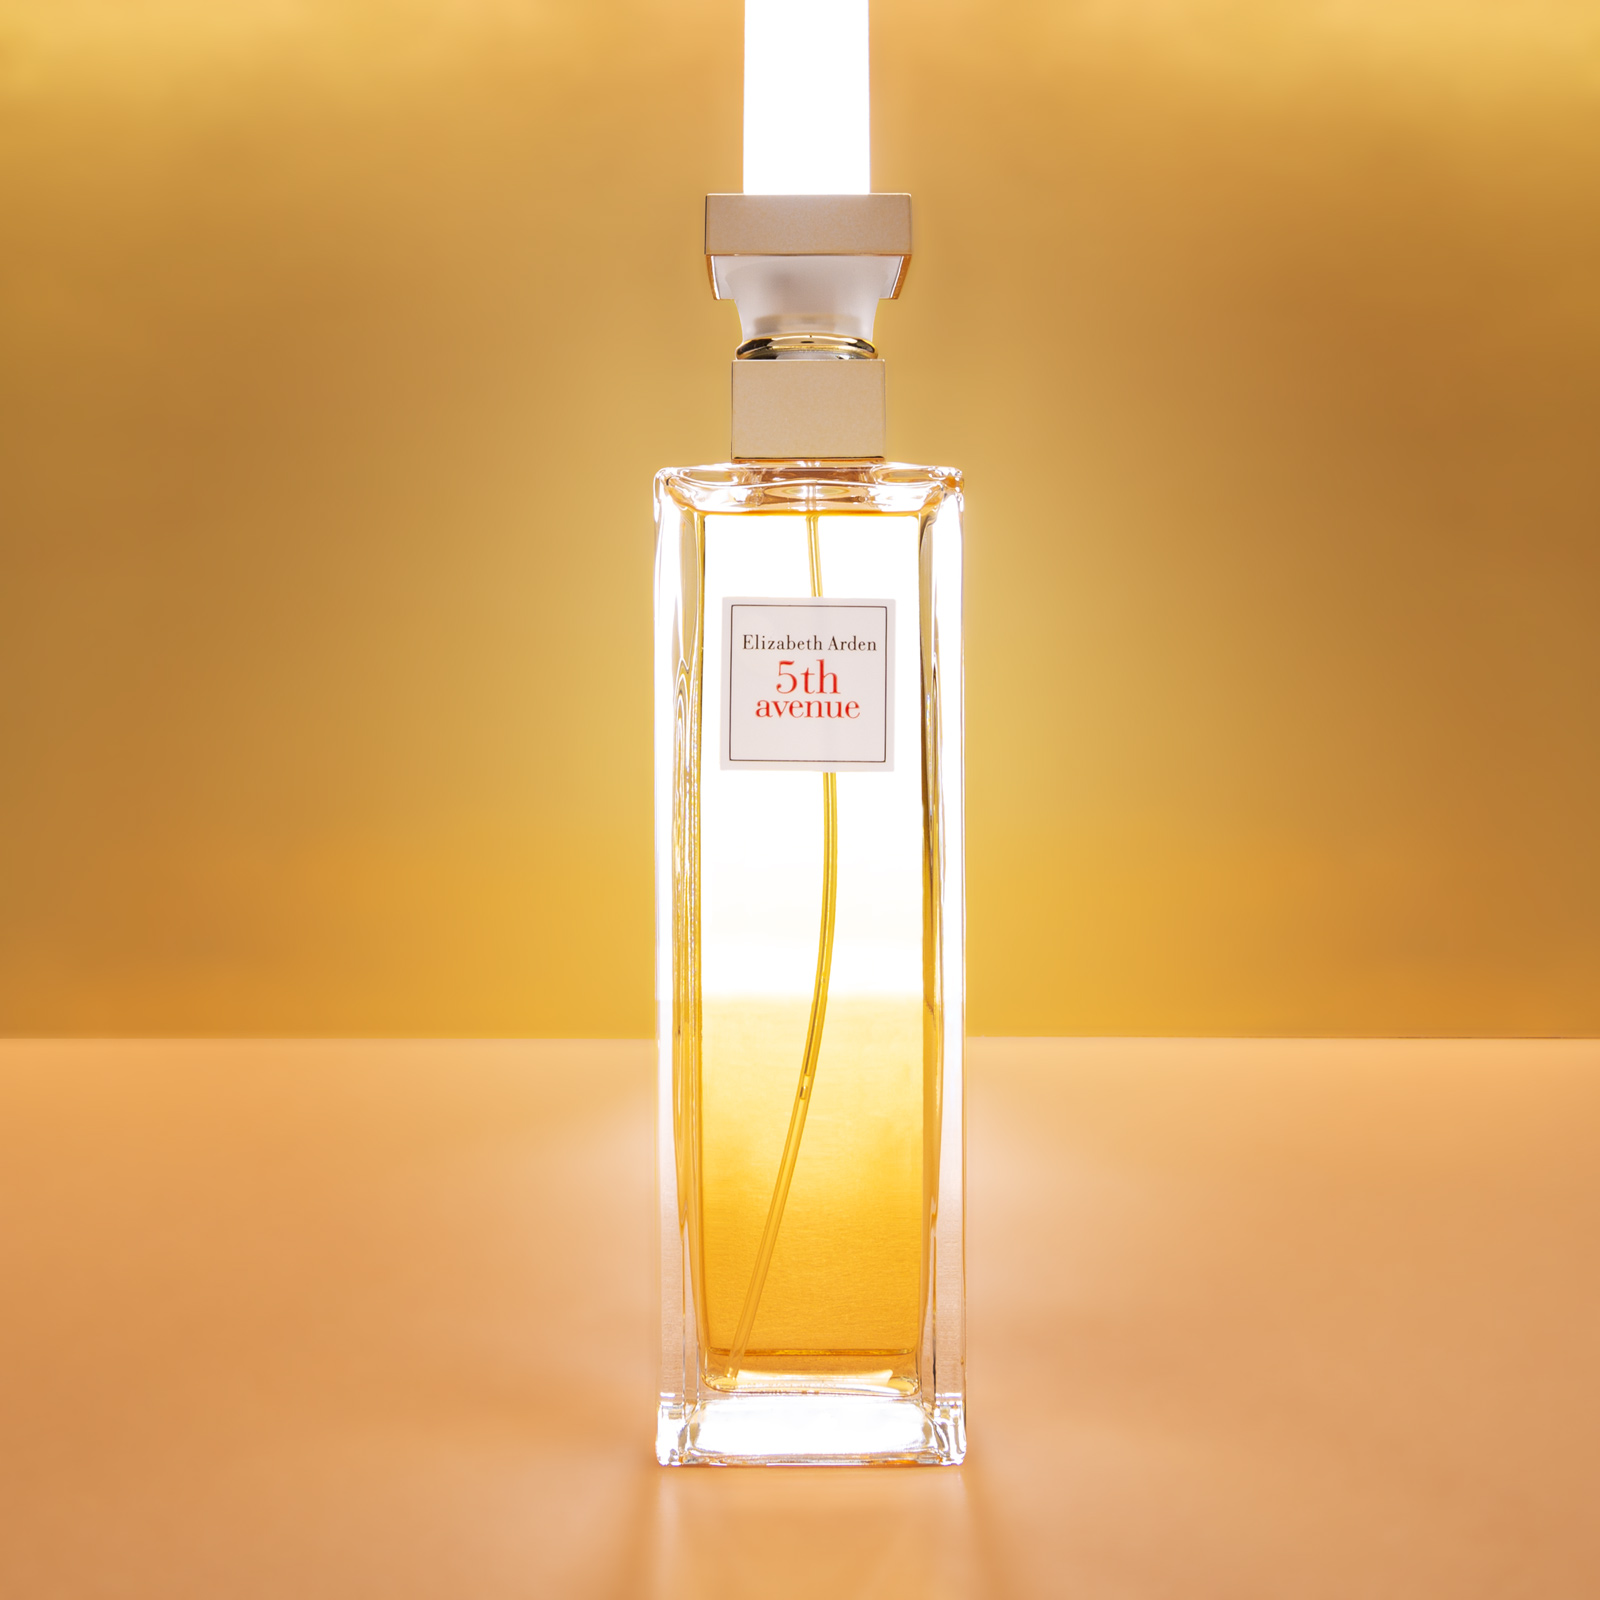 Elizabeth Arden 5th Avenue perfume